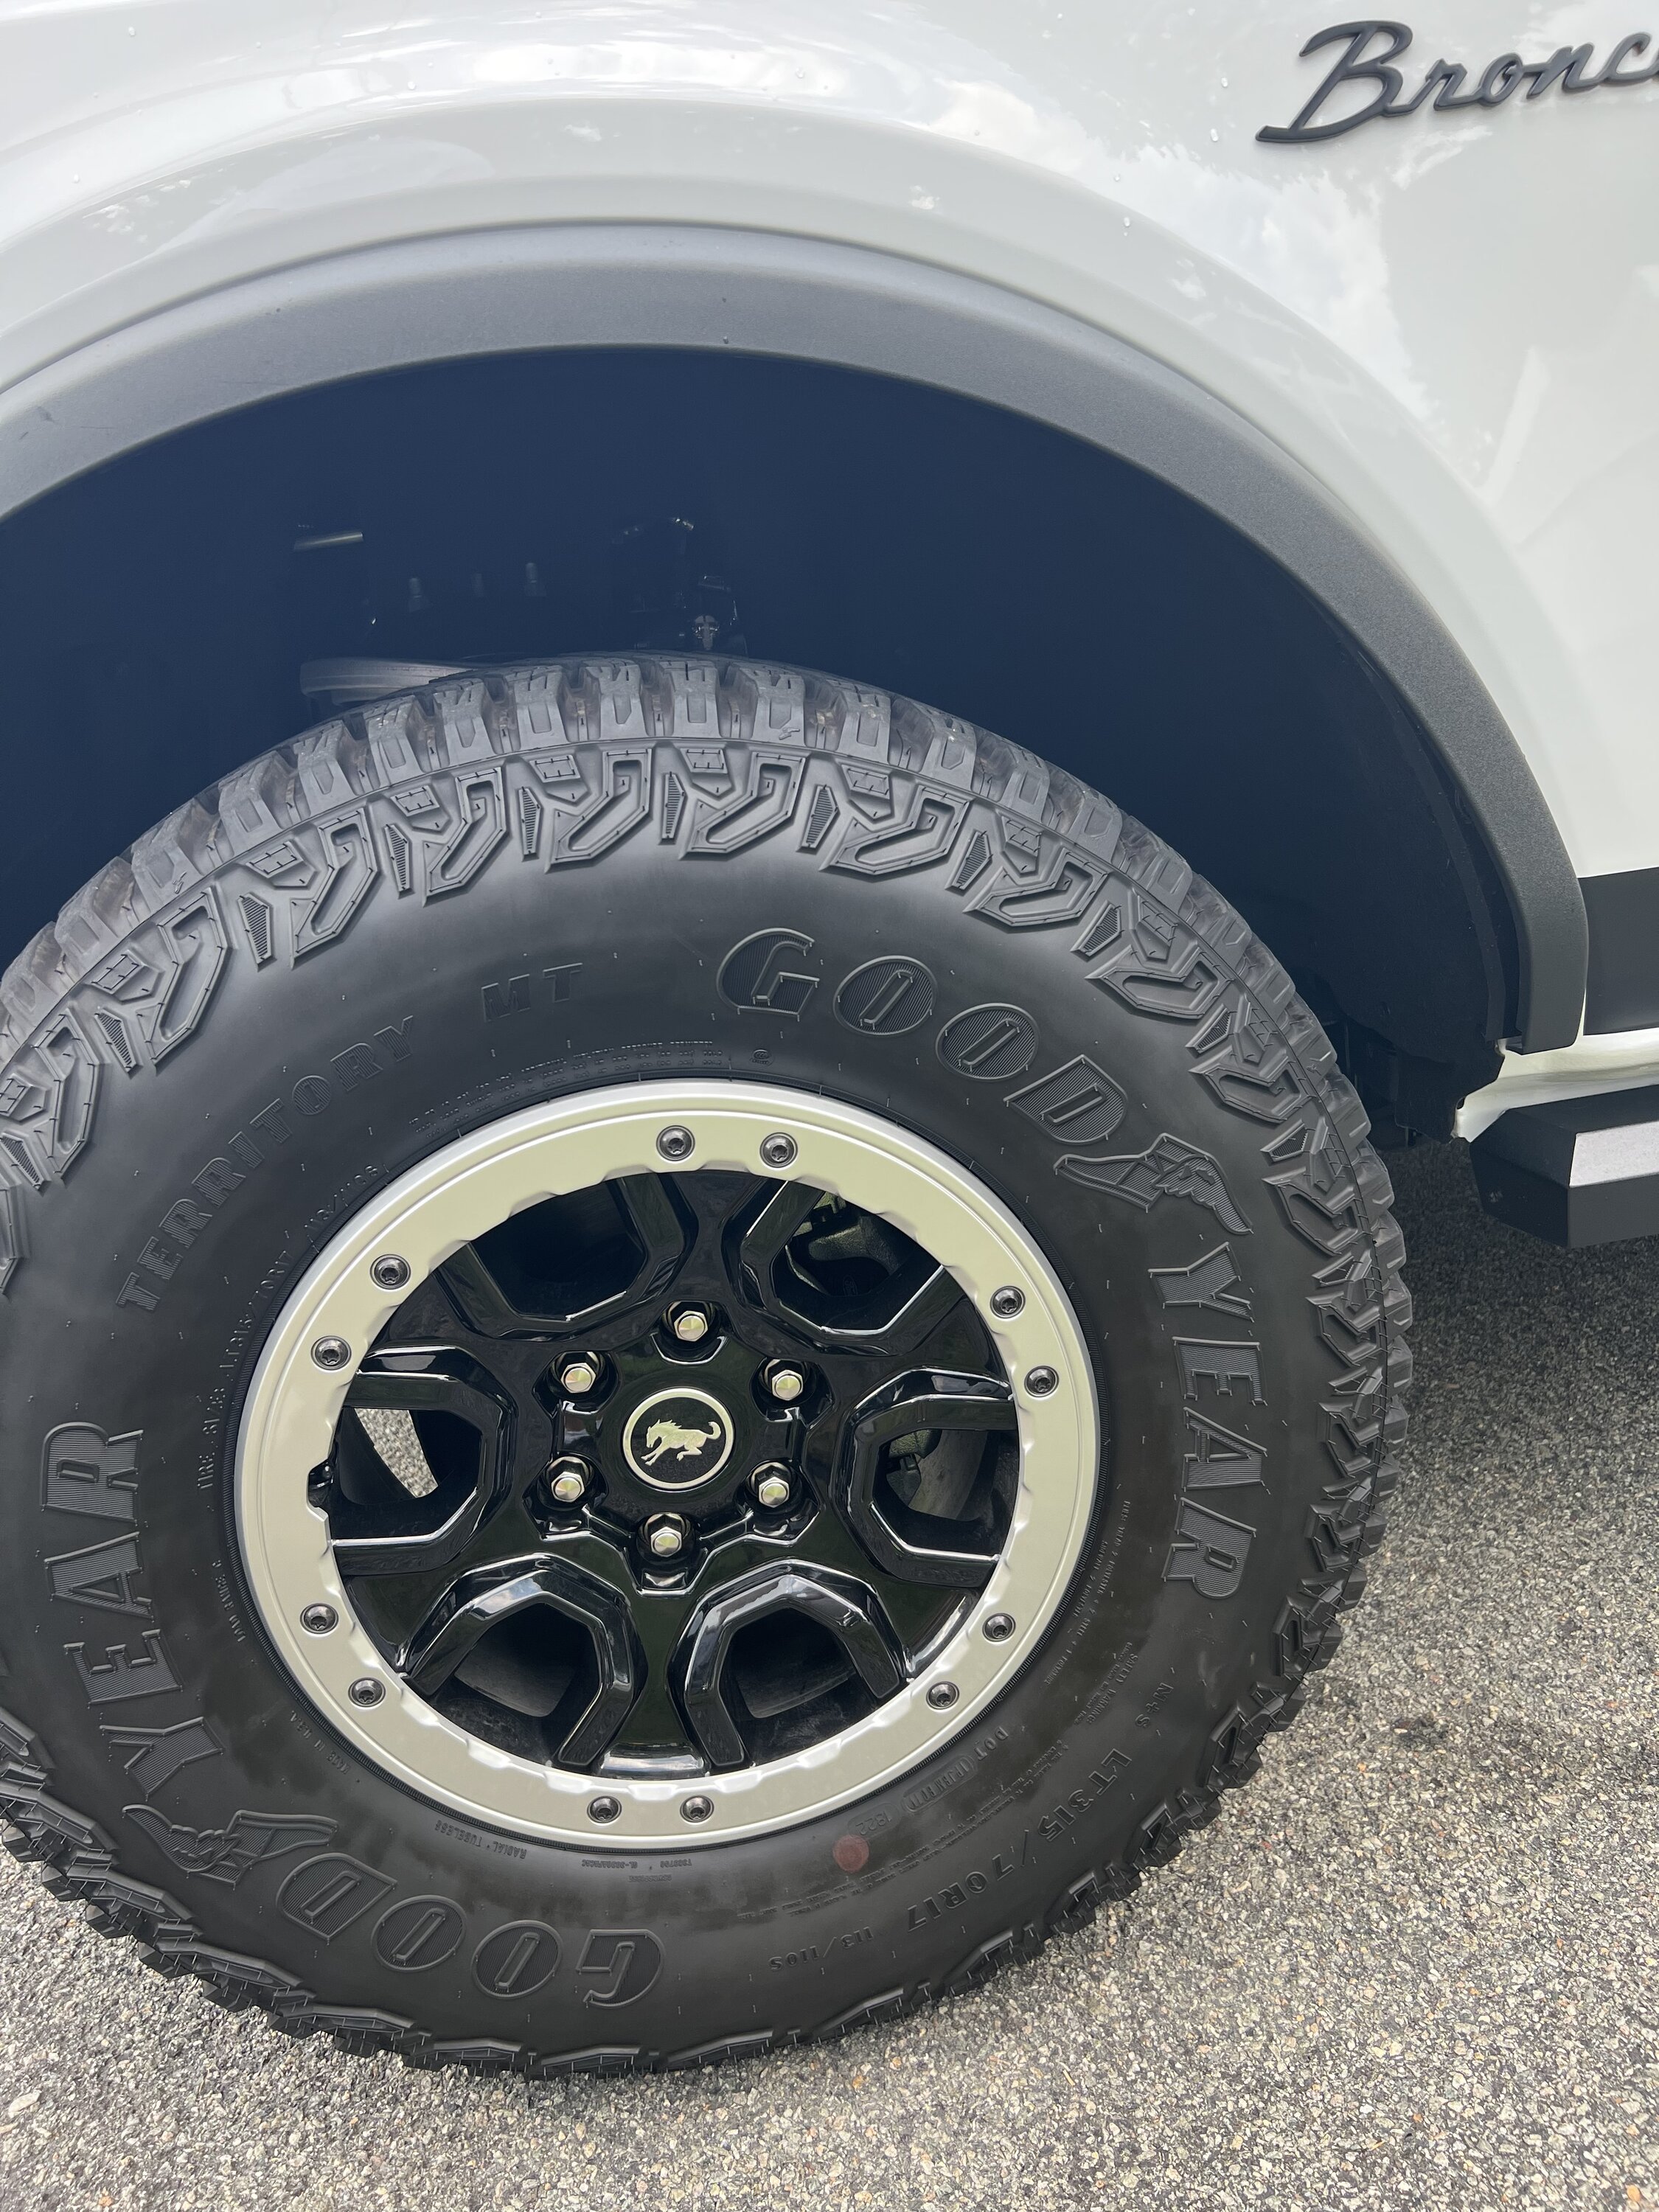 Ford Bronco OEM $90.00 wheel locks or aftermarket? Lugnuts